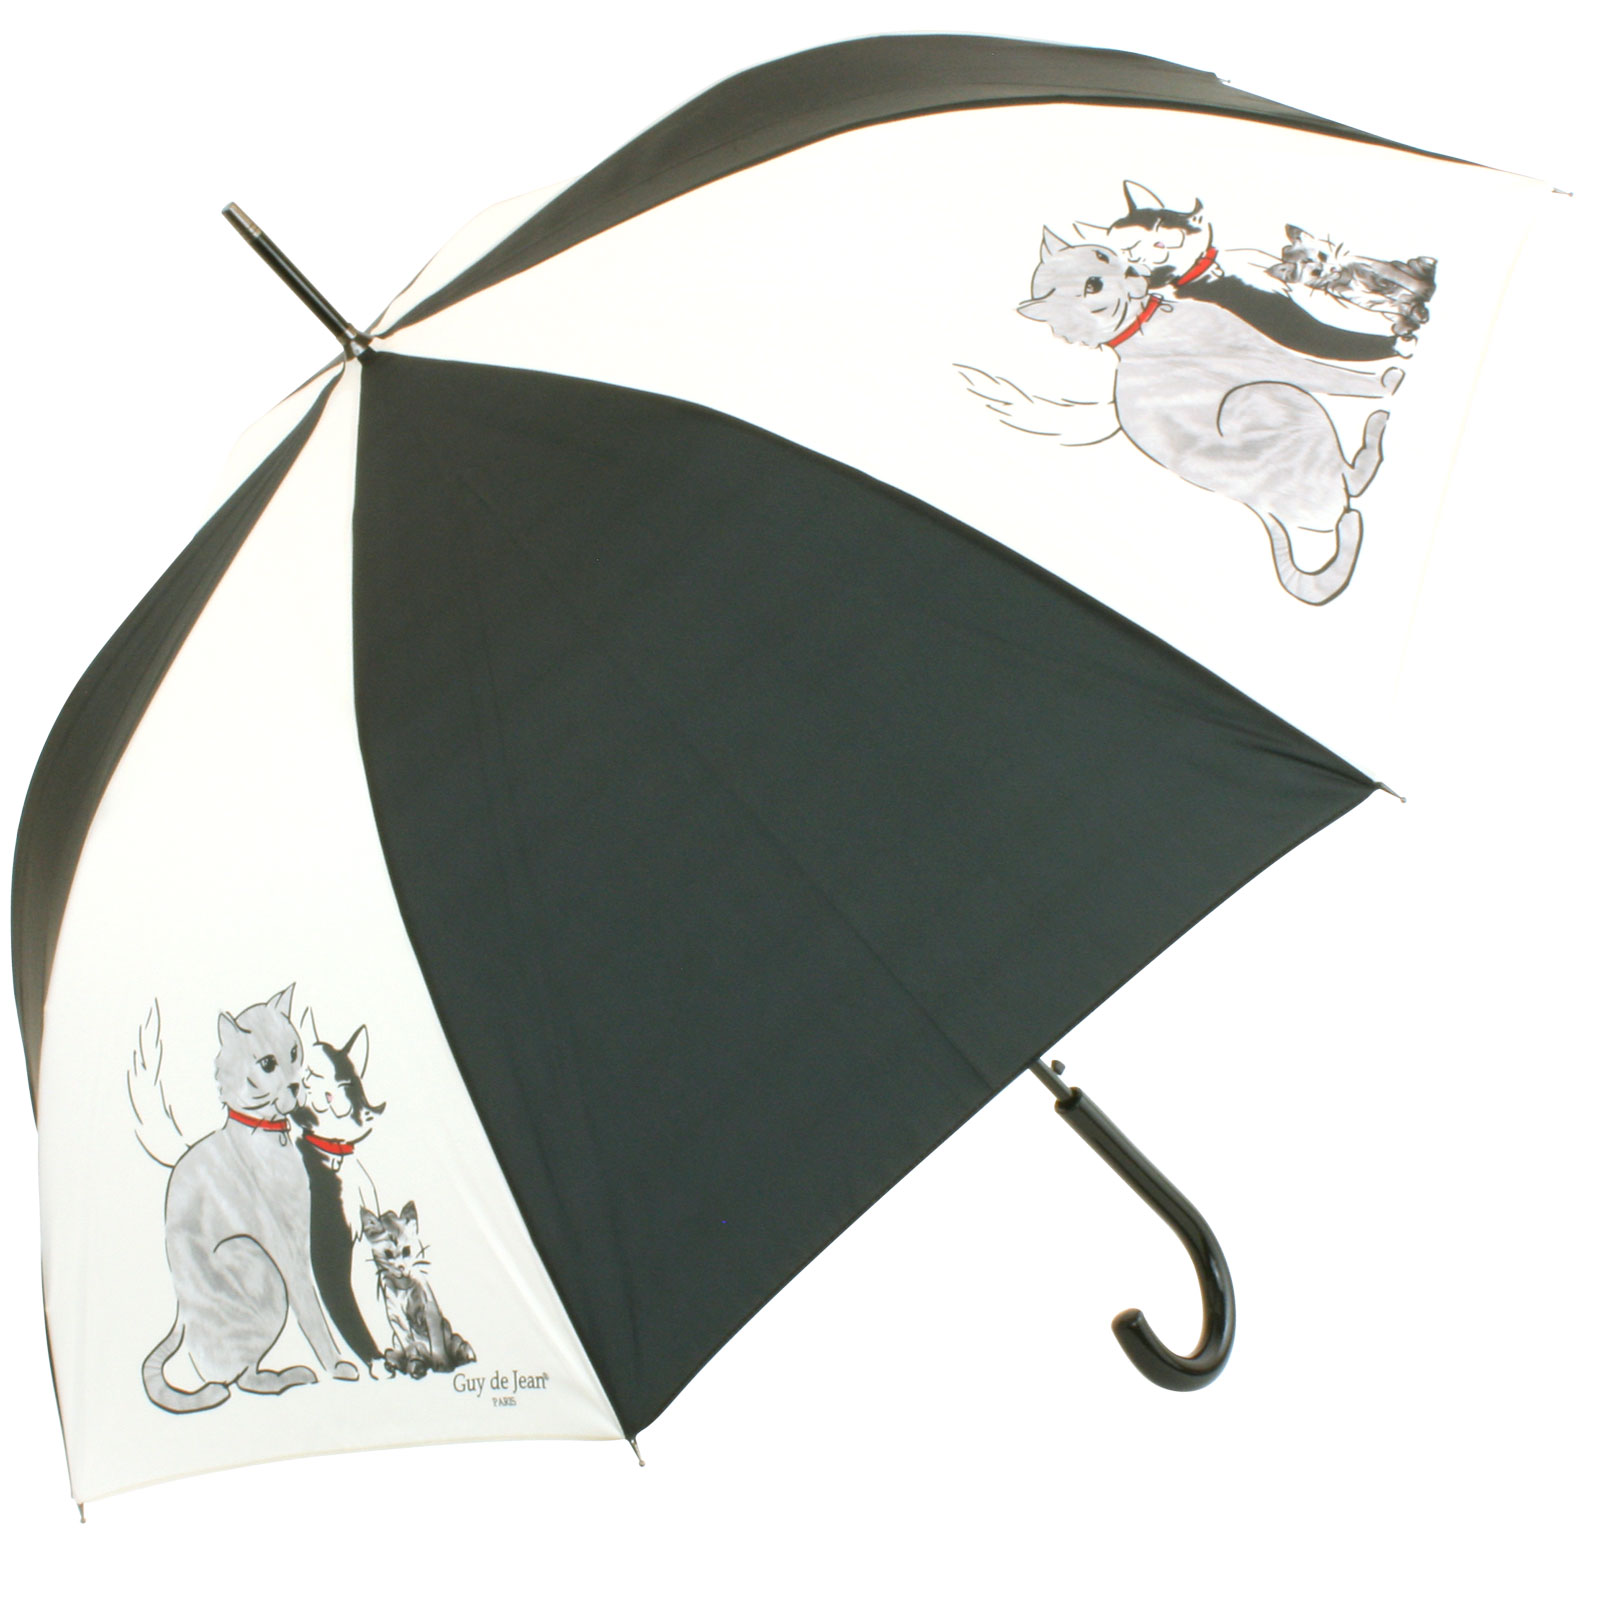 Les Minous Walking Length Umbrella by Guy de Jean